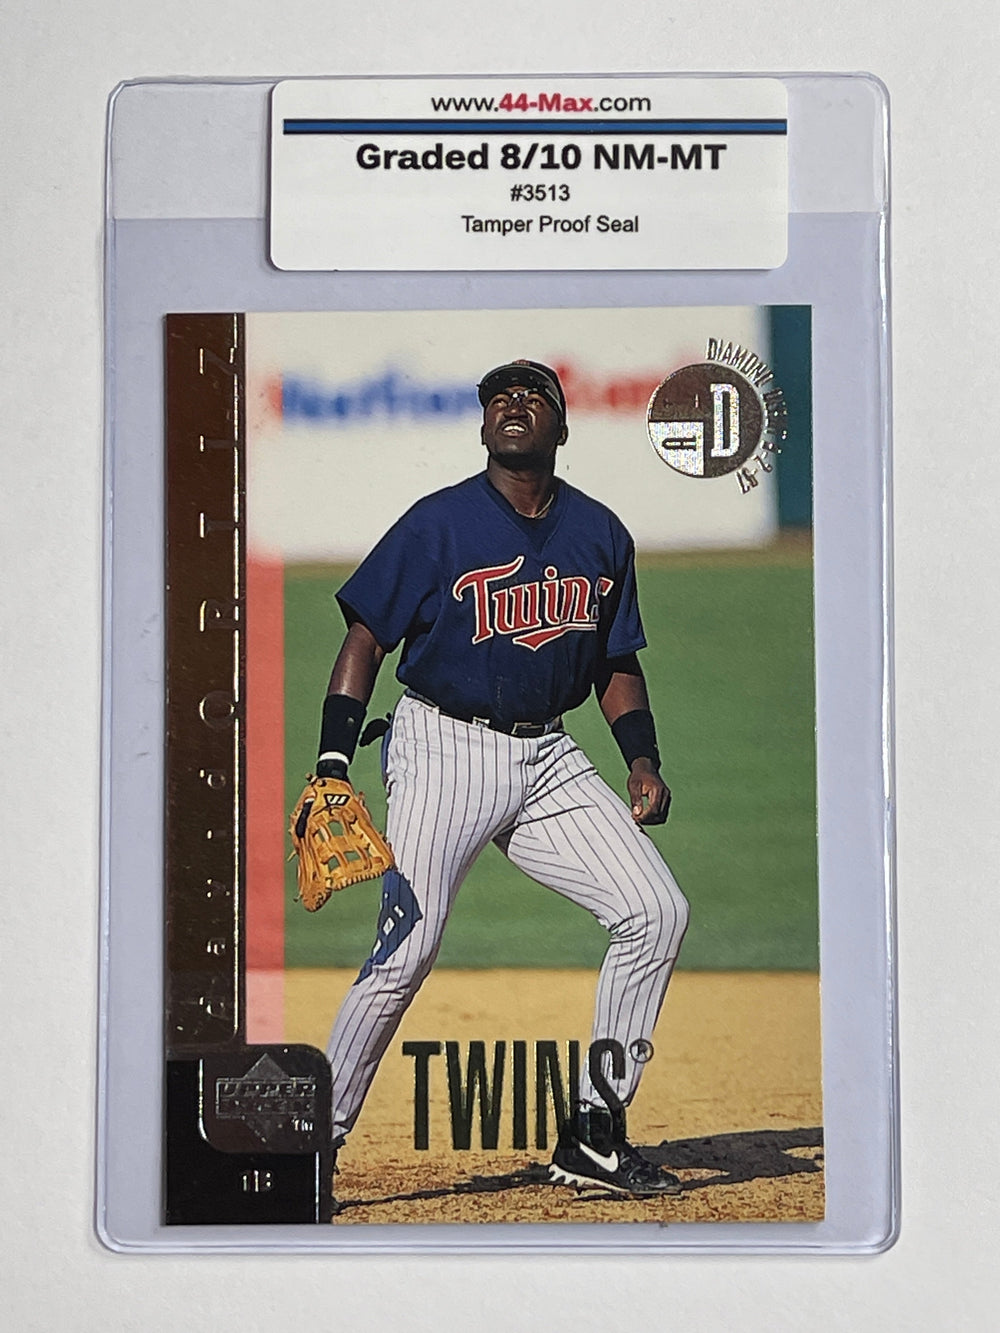 David Ortiz 1998 UD Baseball Card. 44-Max 8/10 NM-MT #3513